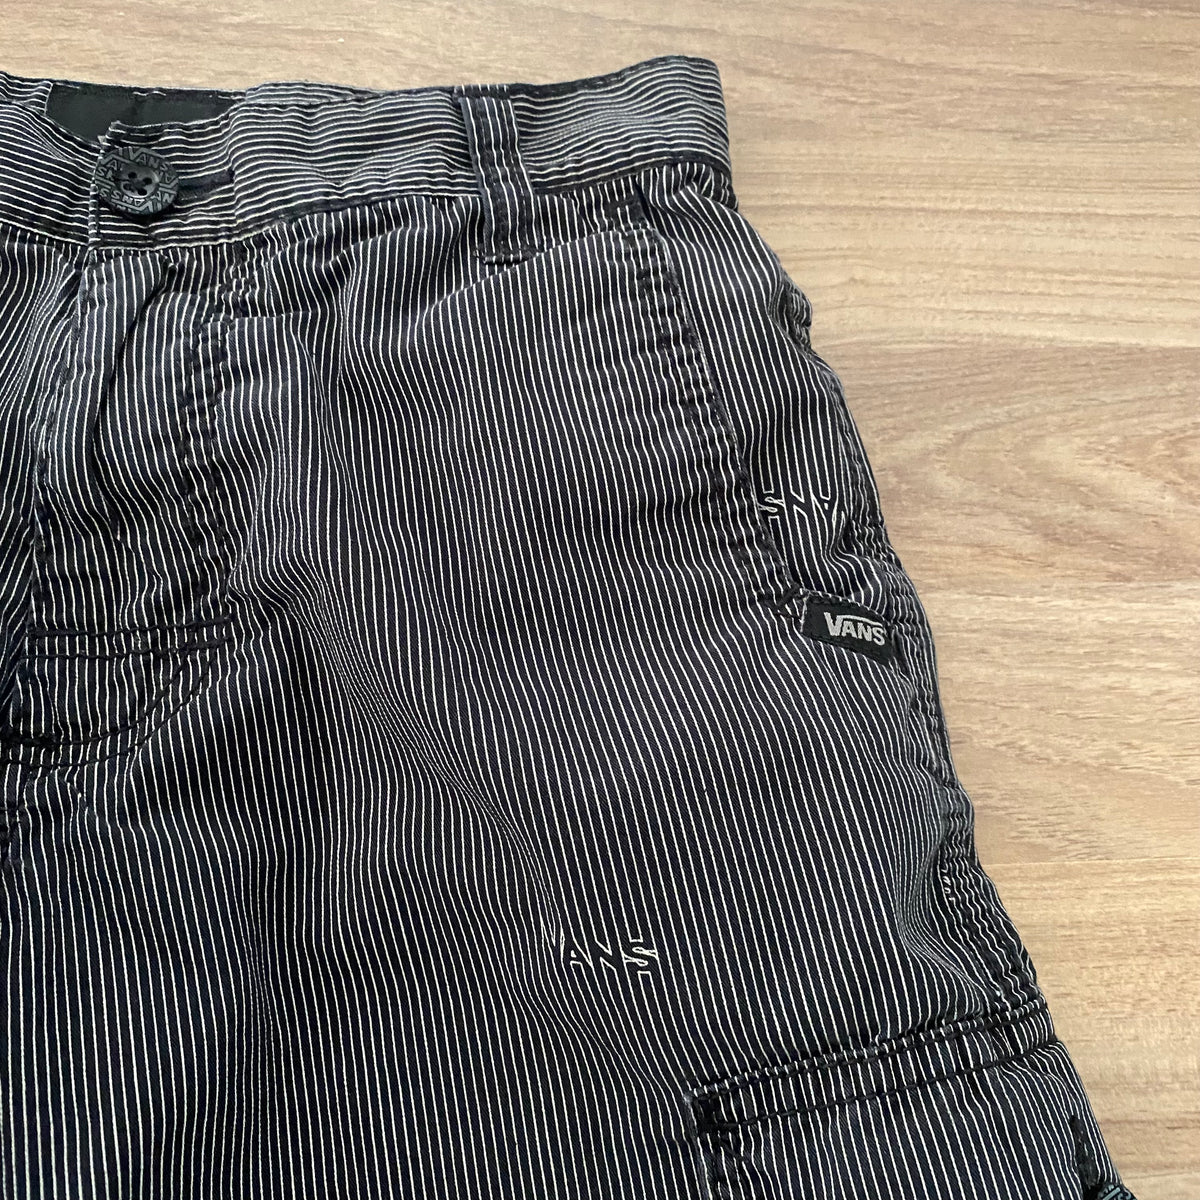 Shorts (Boys Size 10)